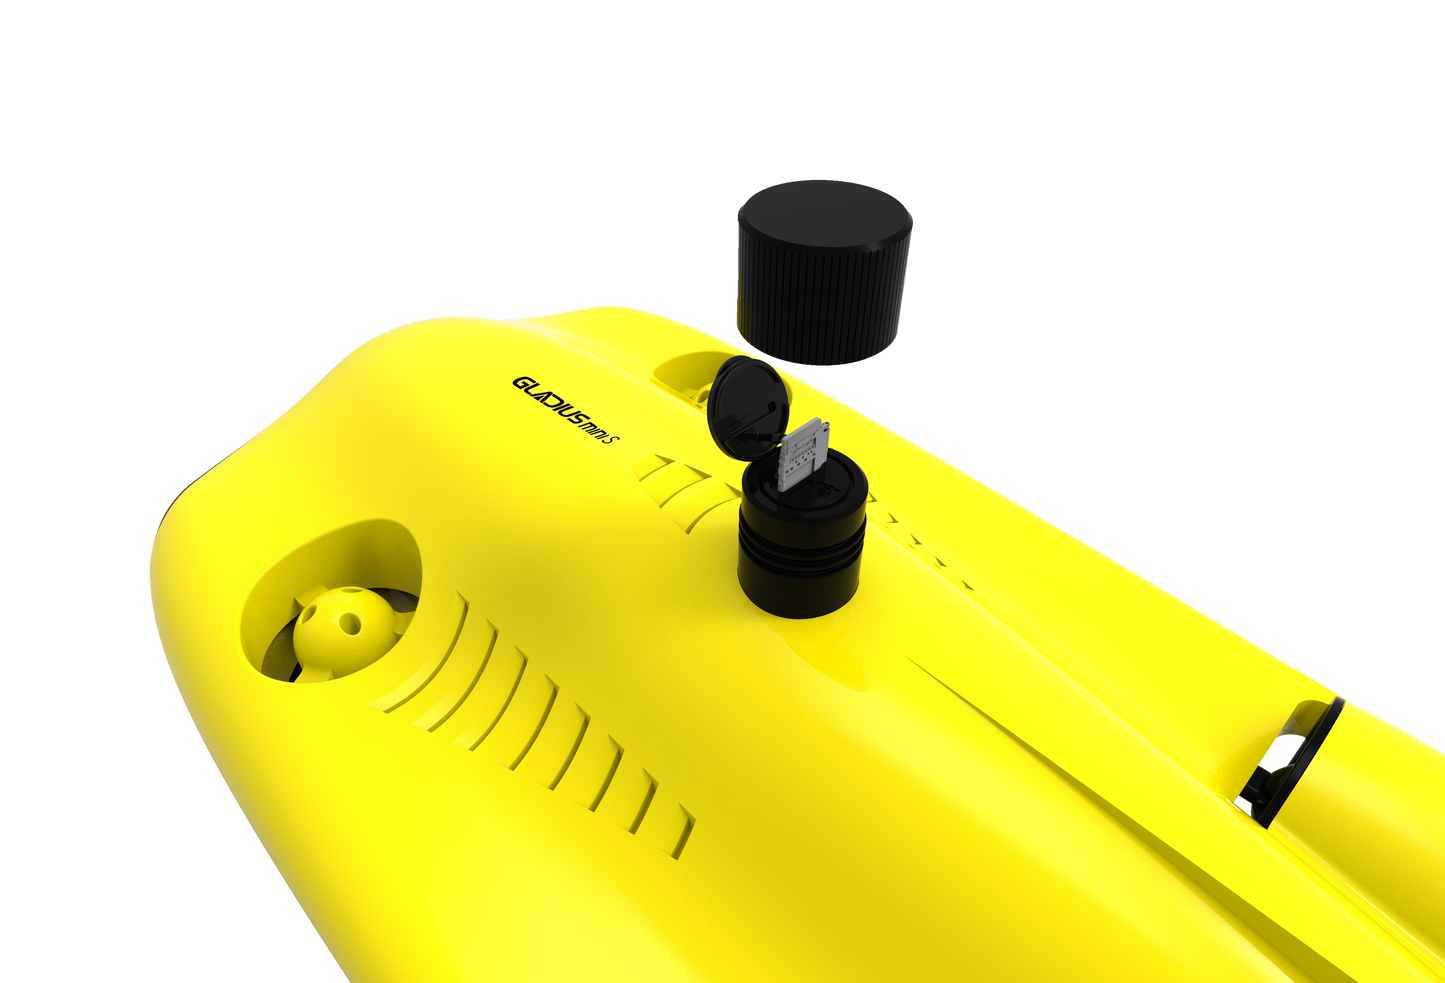 CHASING GLADIUS MINI S - FLASH PACK - Víz alatti kamerás drón csomag